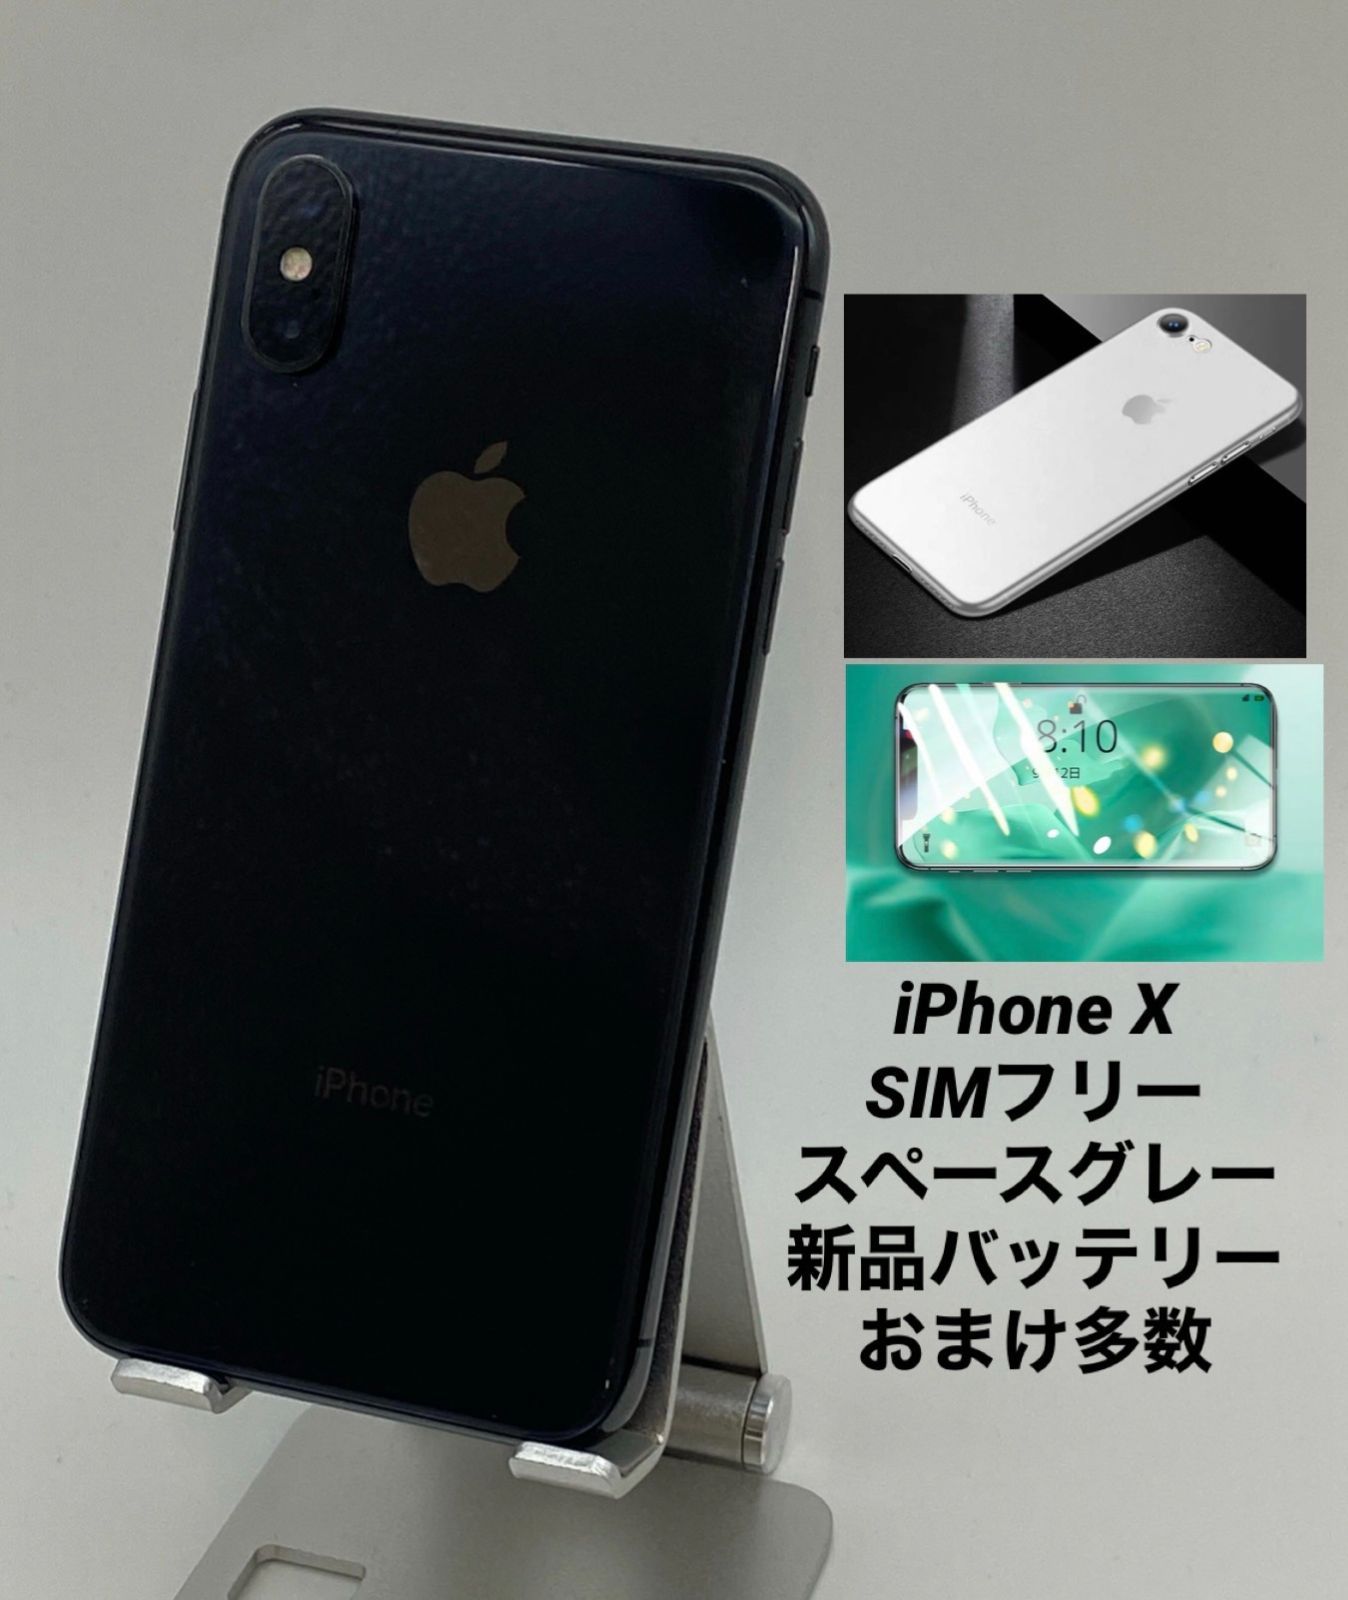 iPhoneX 256GB space grey SIMフリー | jayceebrands.com